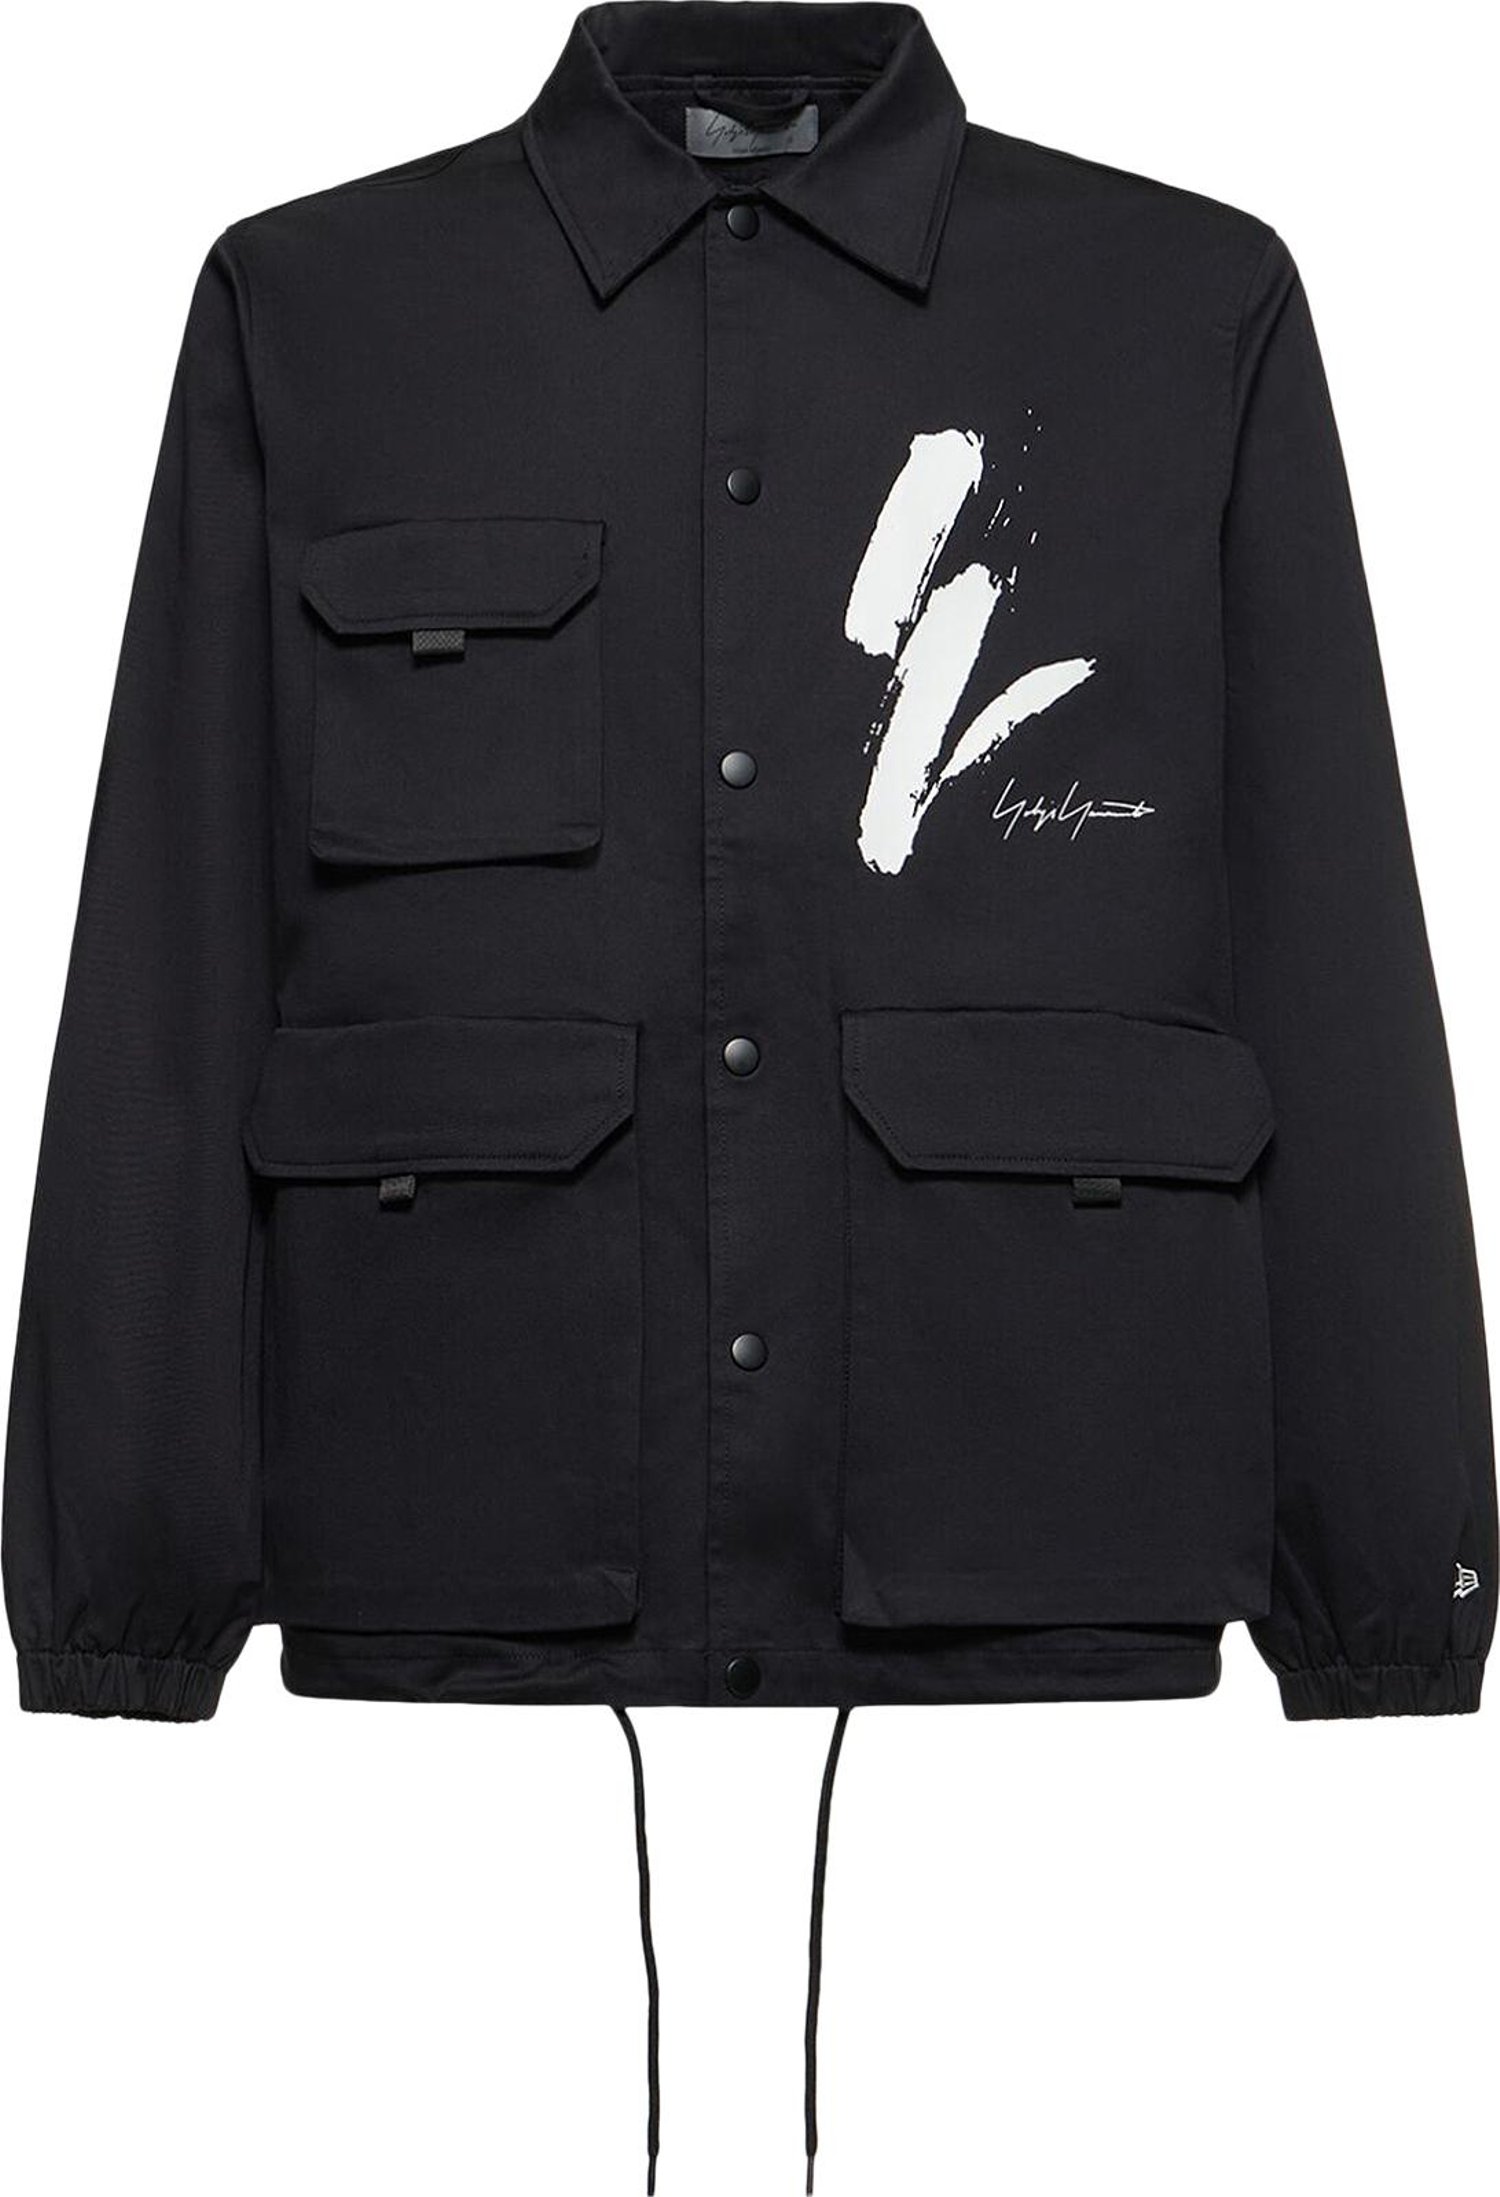 Buy Yohji Yamamoto Field Coach Jacket 'Black' - HJ Y99 039 1 | GOAT